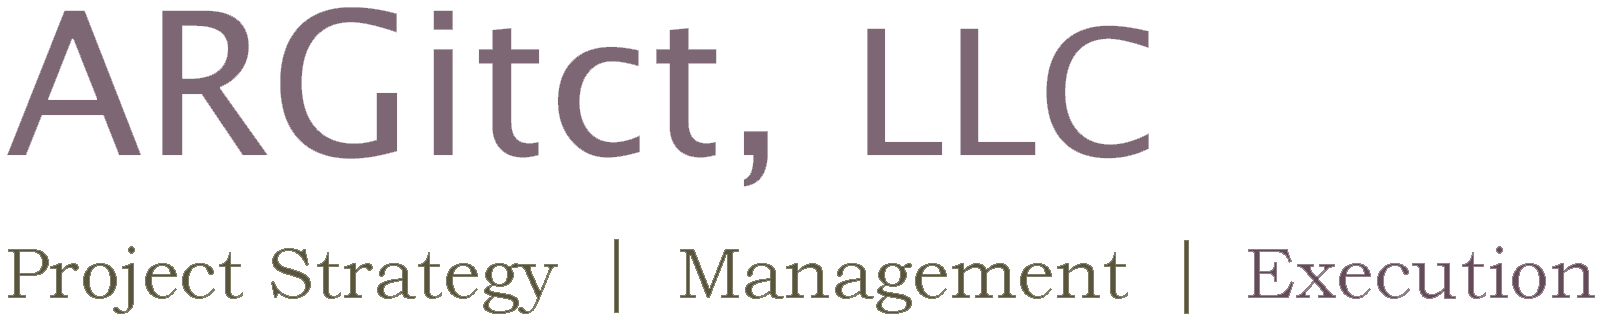 ARGitct, LLC Project Strategy | Management | Execution